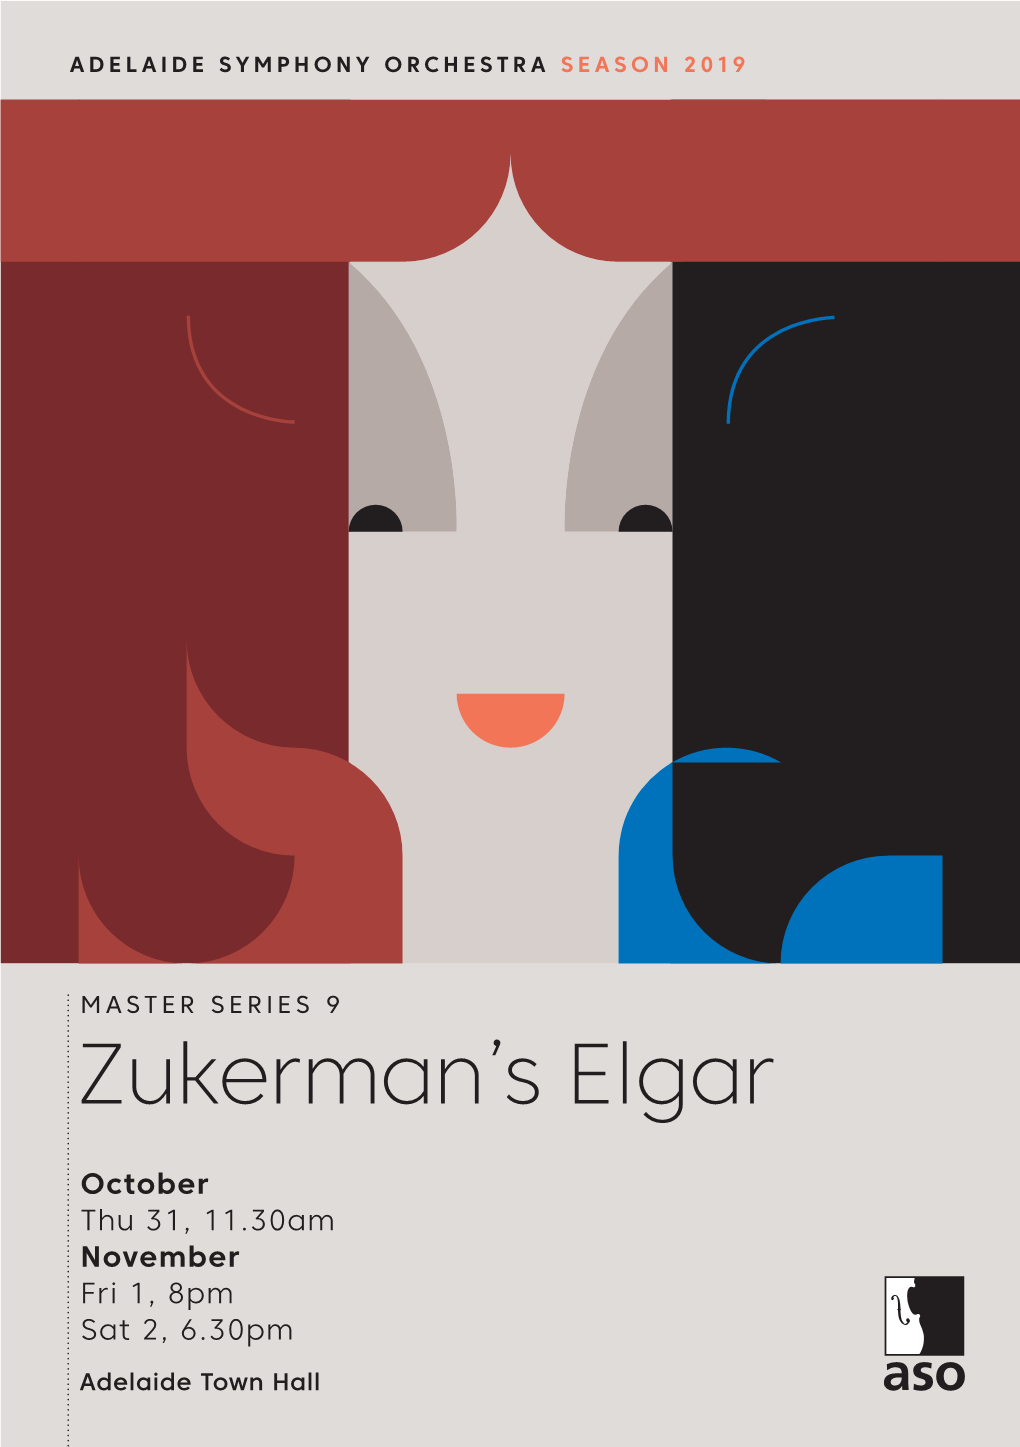 Zukerman's Elgar